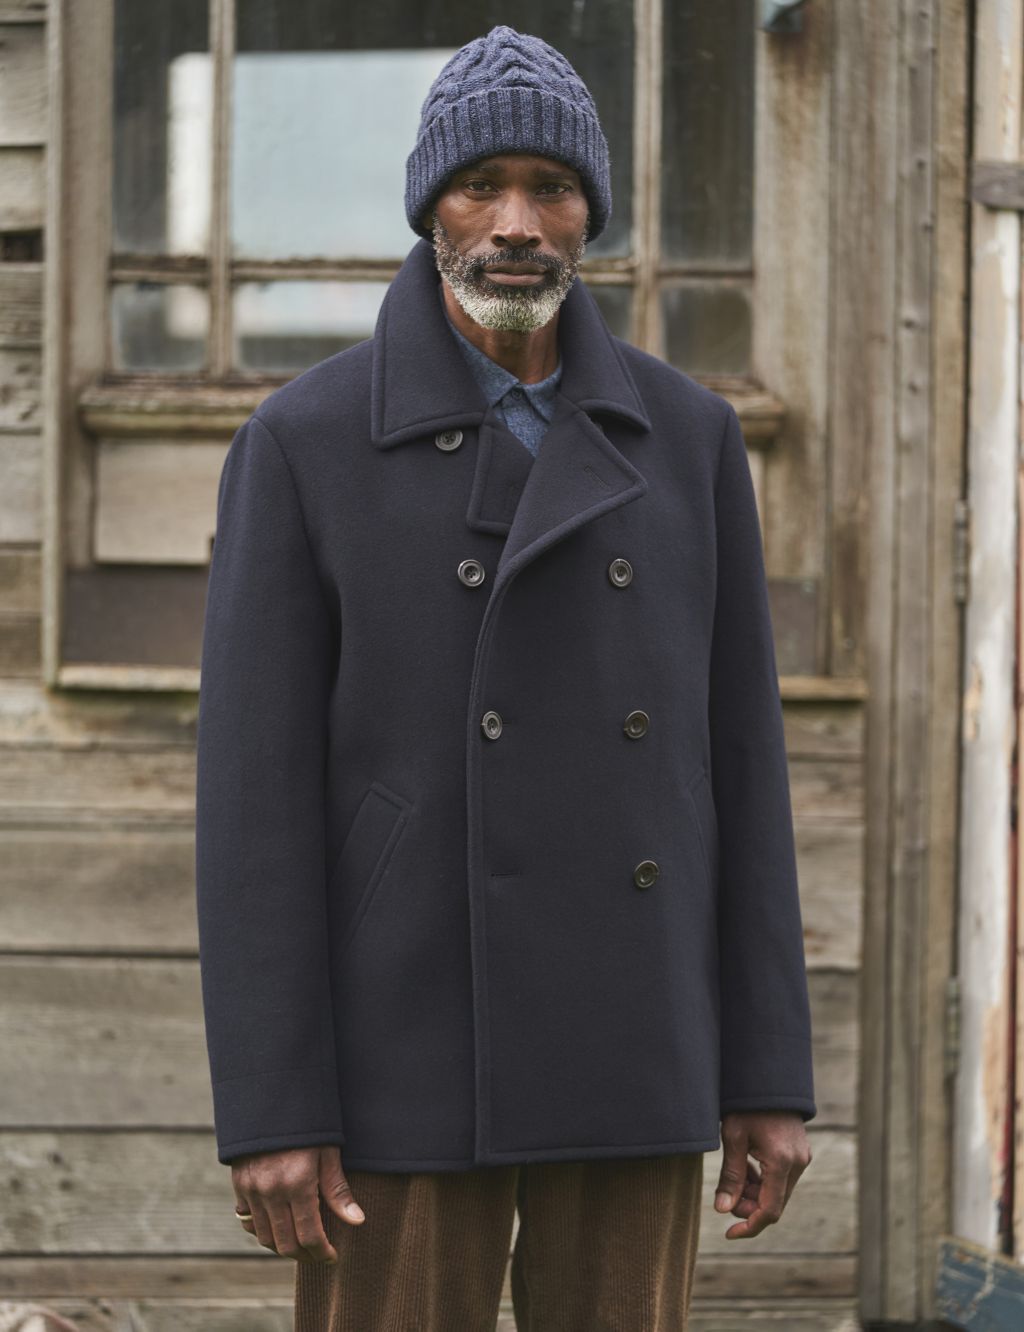 Generic Winter Wool Coat Slim Fit Jackets Mens Casual Warm